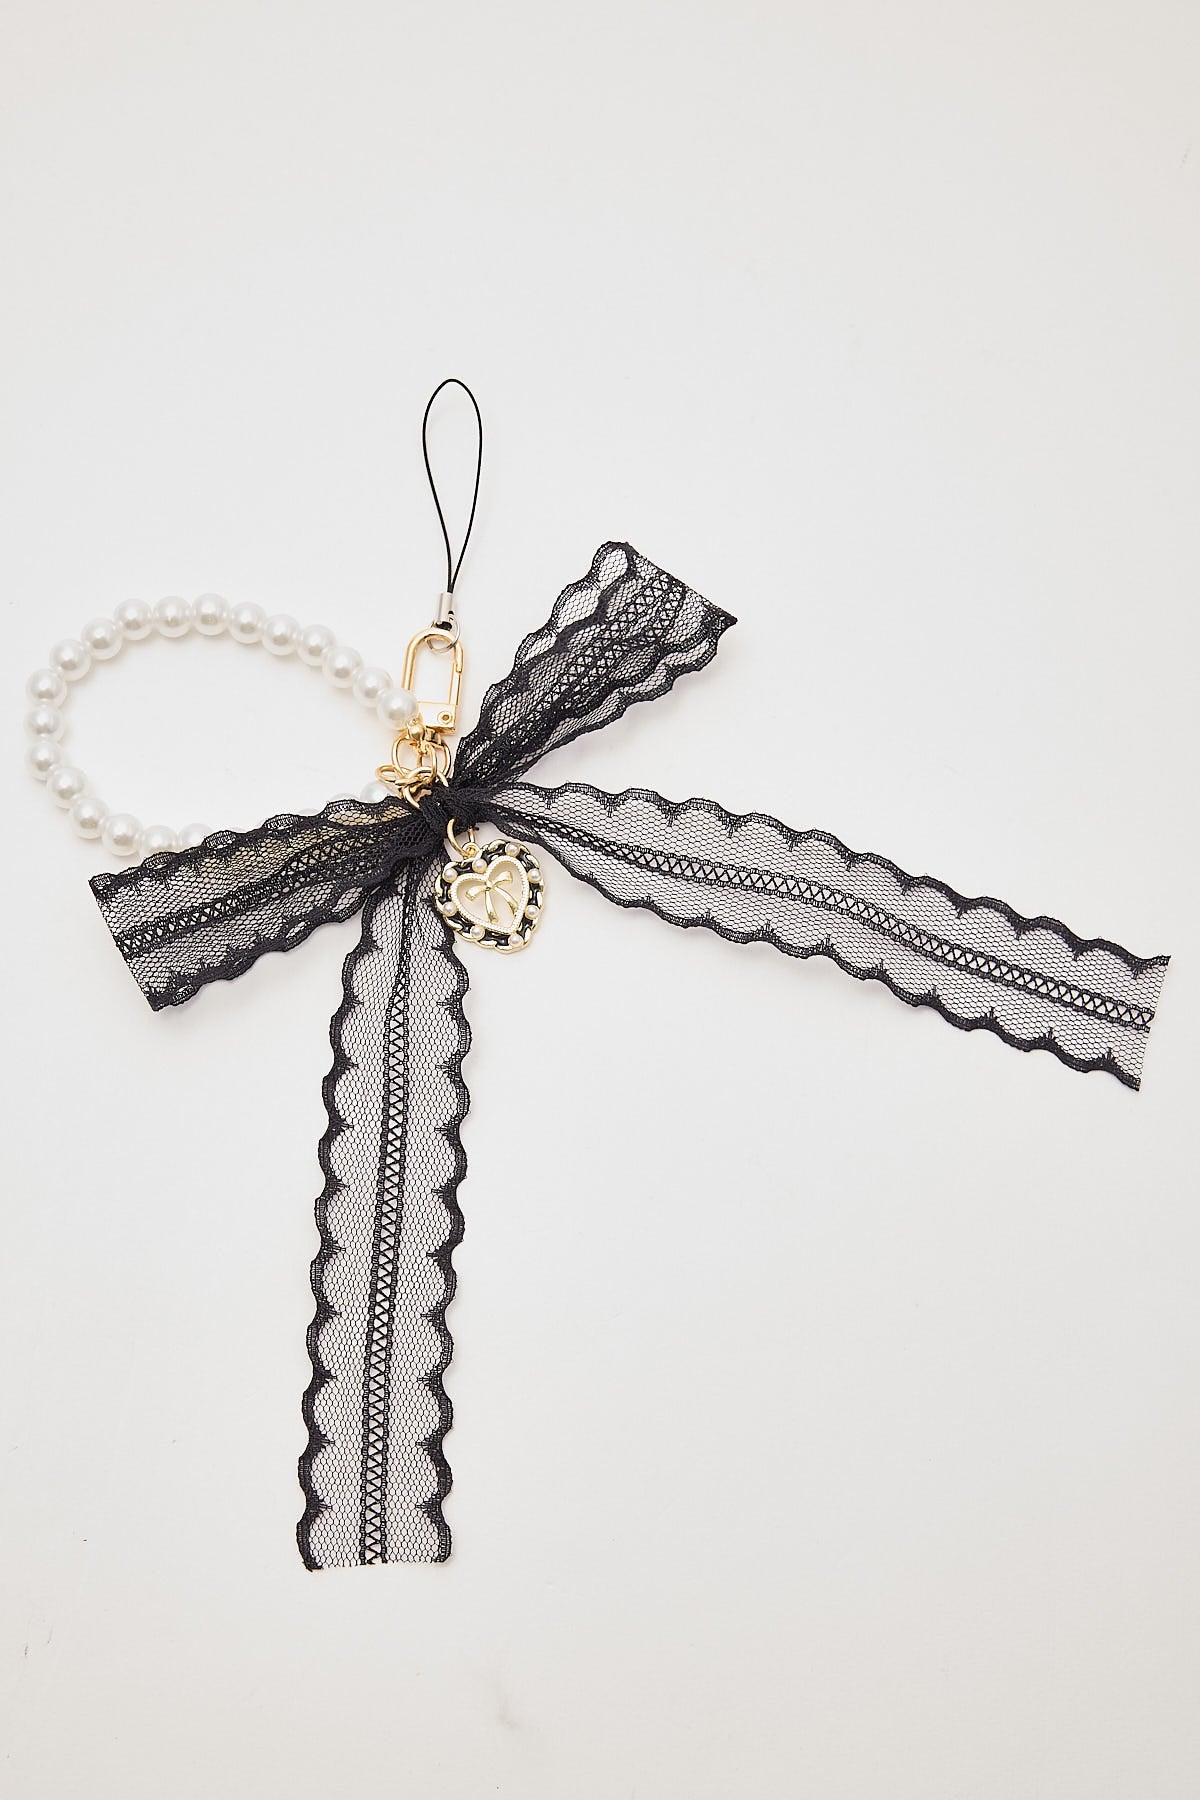 Token Lace Ribbon Pearl Bag Keychain Black / White